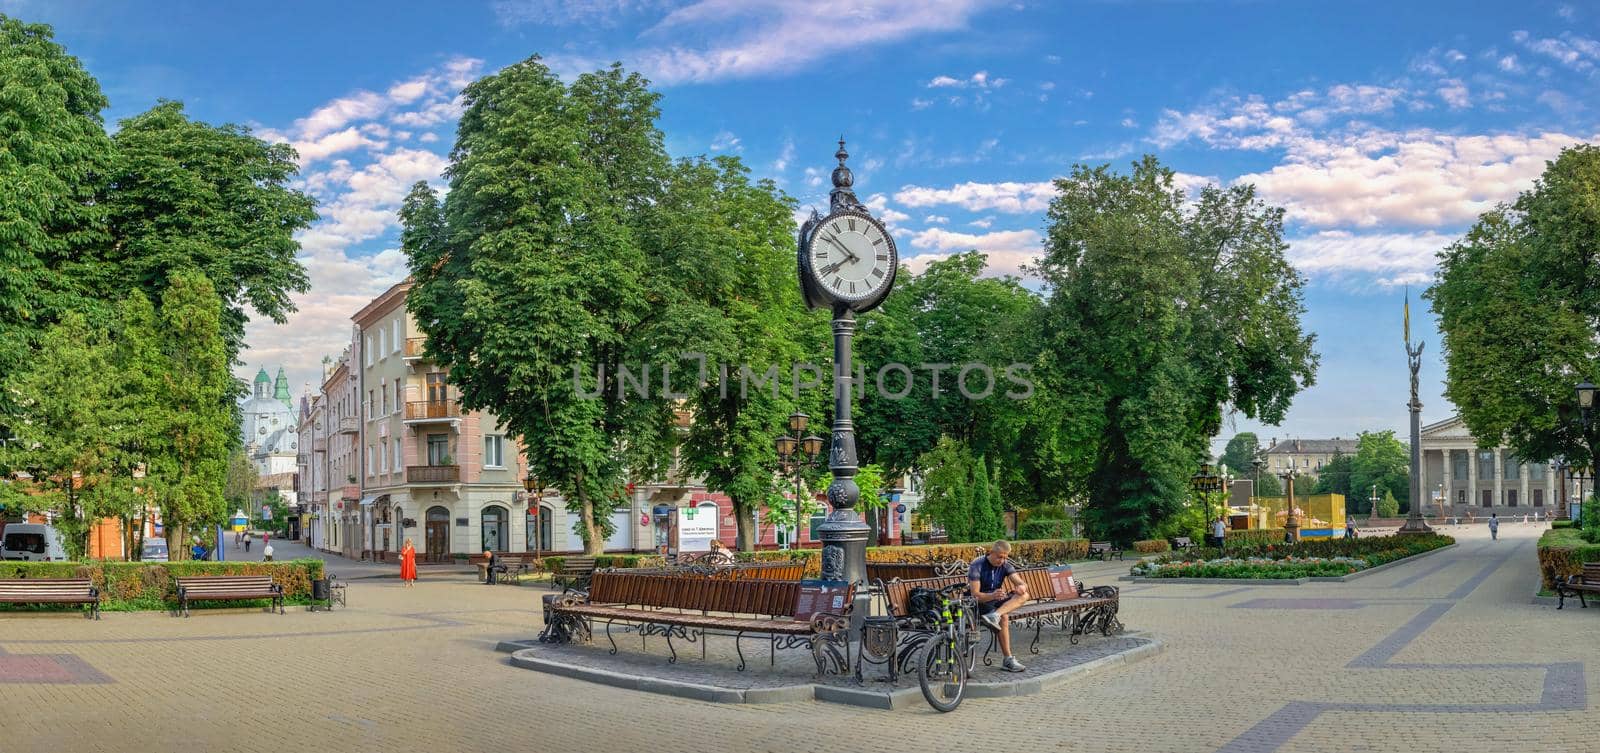 Ternopil, Ukraine 06.07.2021. Tripartite clock  on the Taras Shevchenko Boulevard in Ternopil, Ukraine, on a sunny summer morning